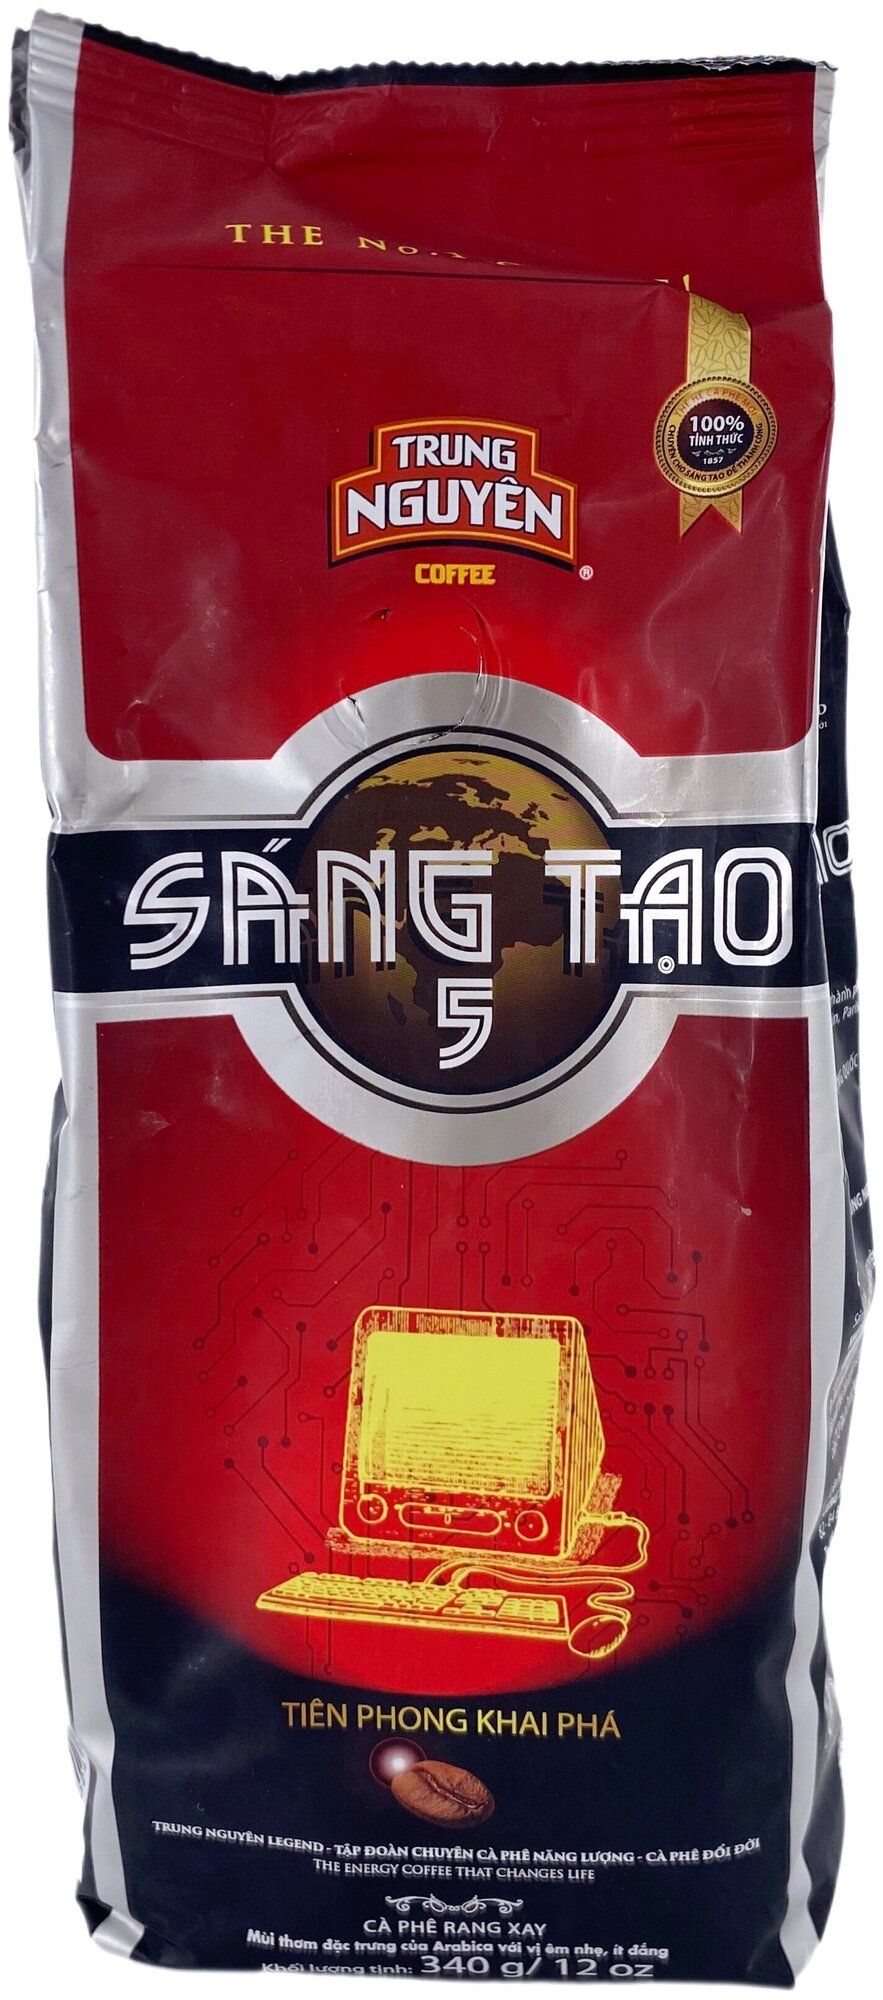 Вьетнамский кофе молотый "Sang Tao" №5, чунг нгуен, 340 гр